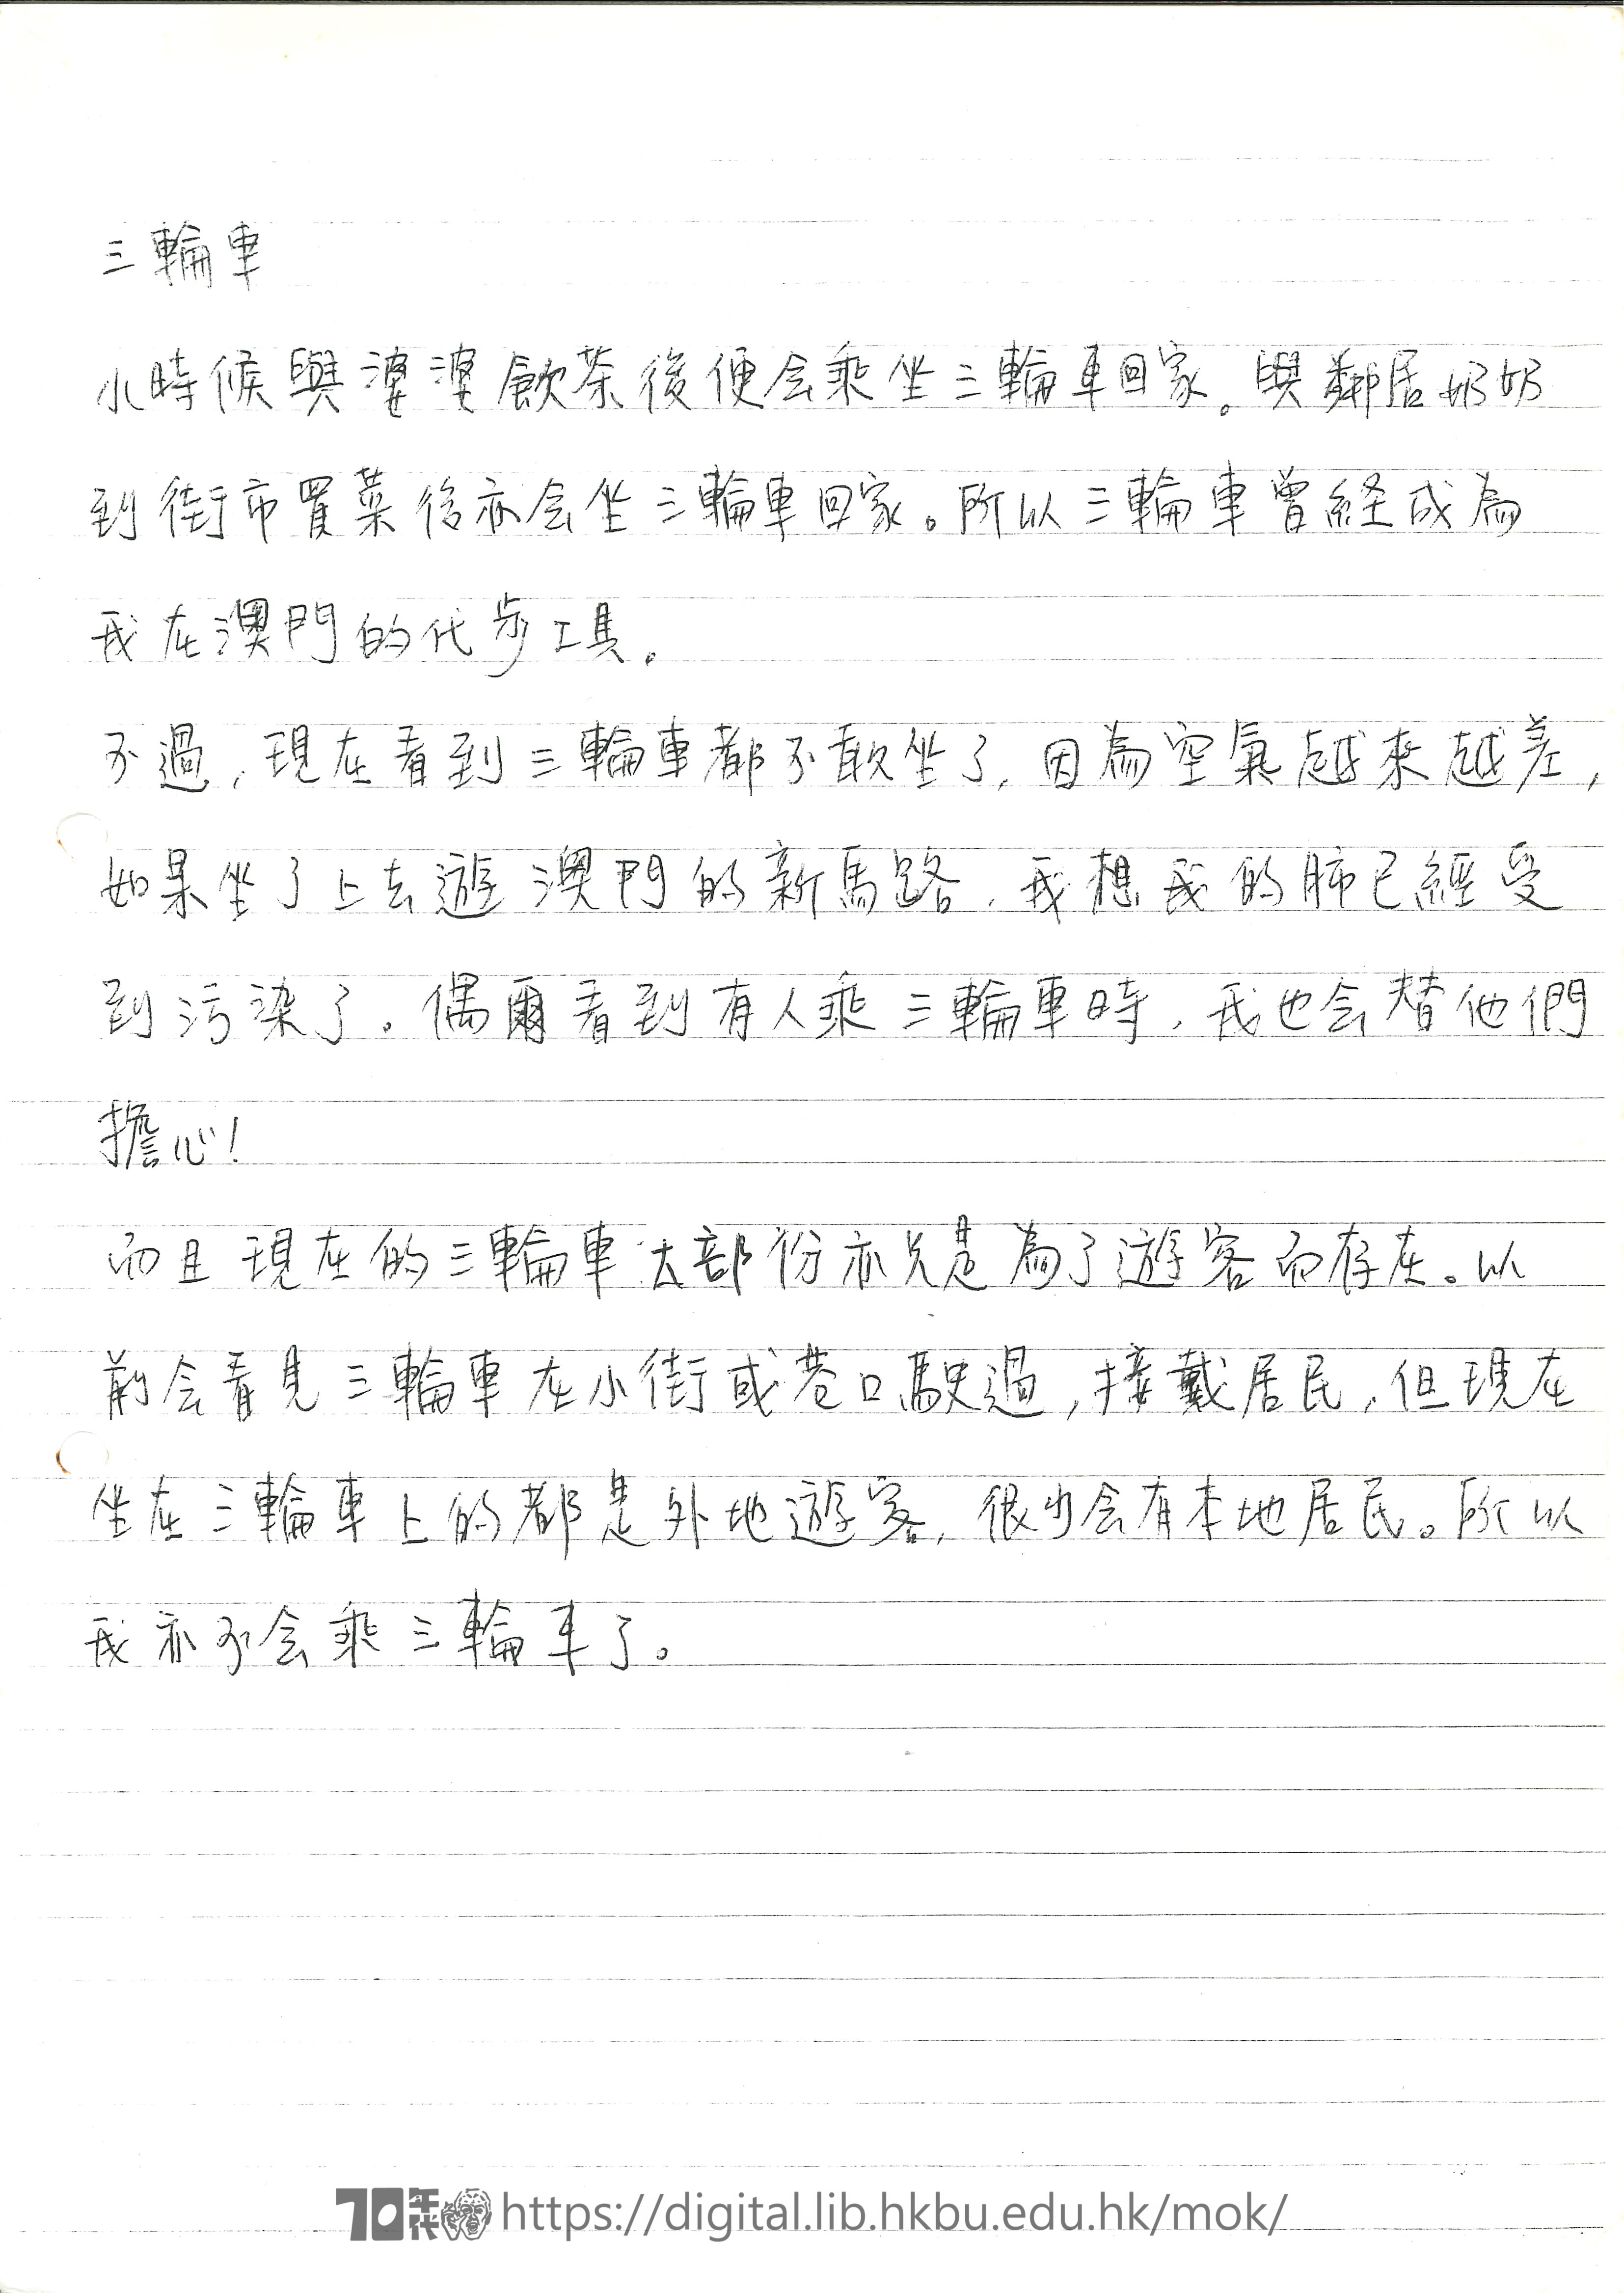 Macau 123  Macau 123 early script draft segments and notes - richshaw  